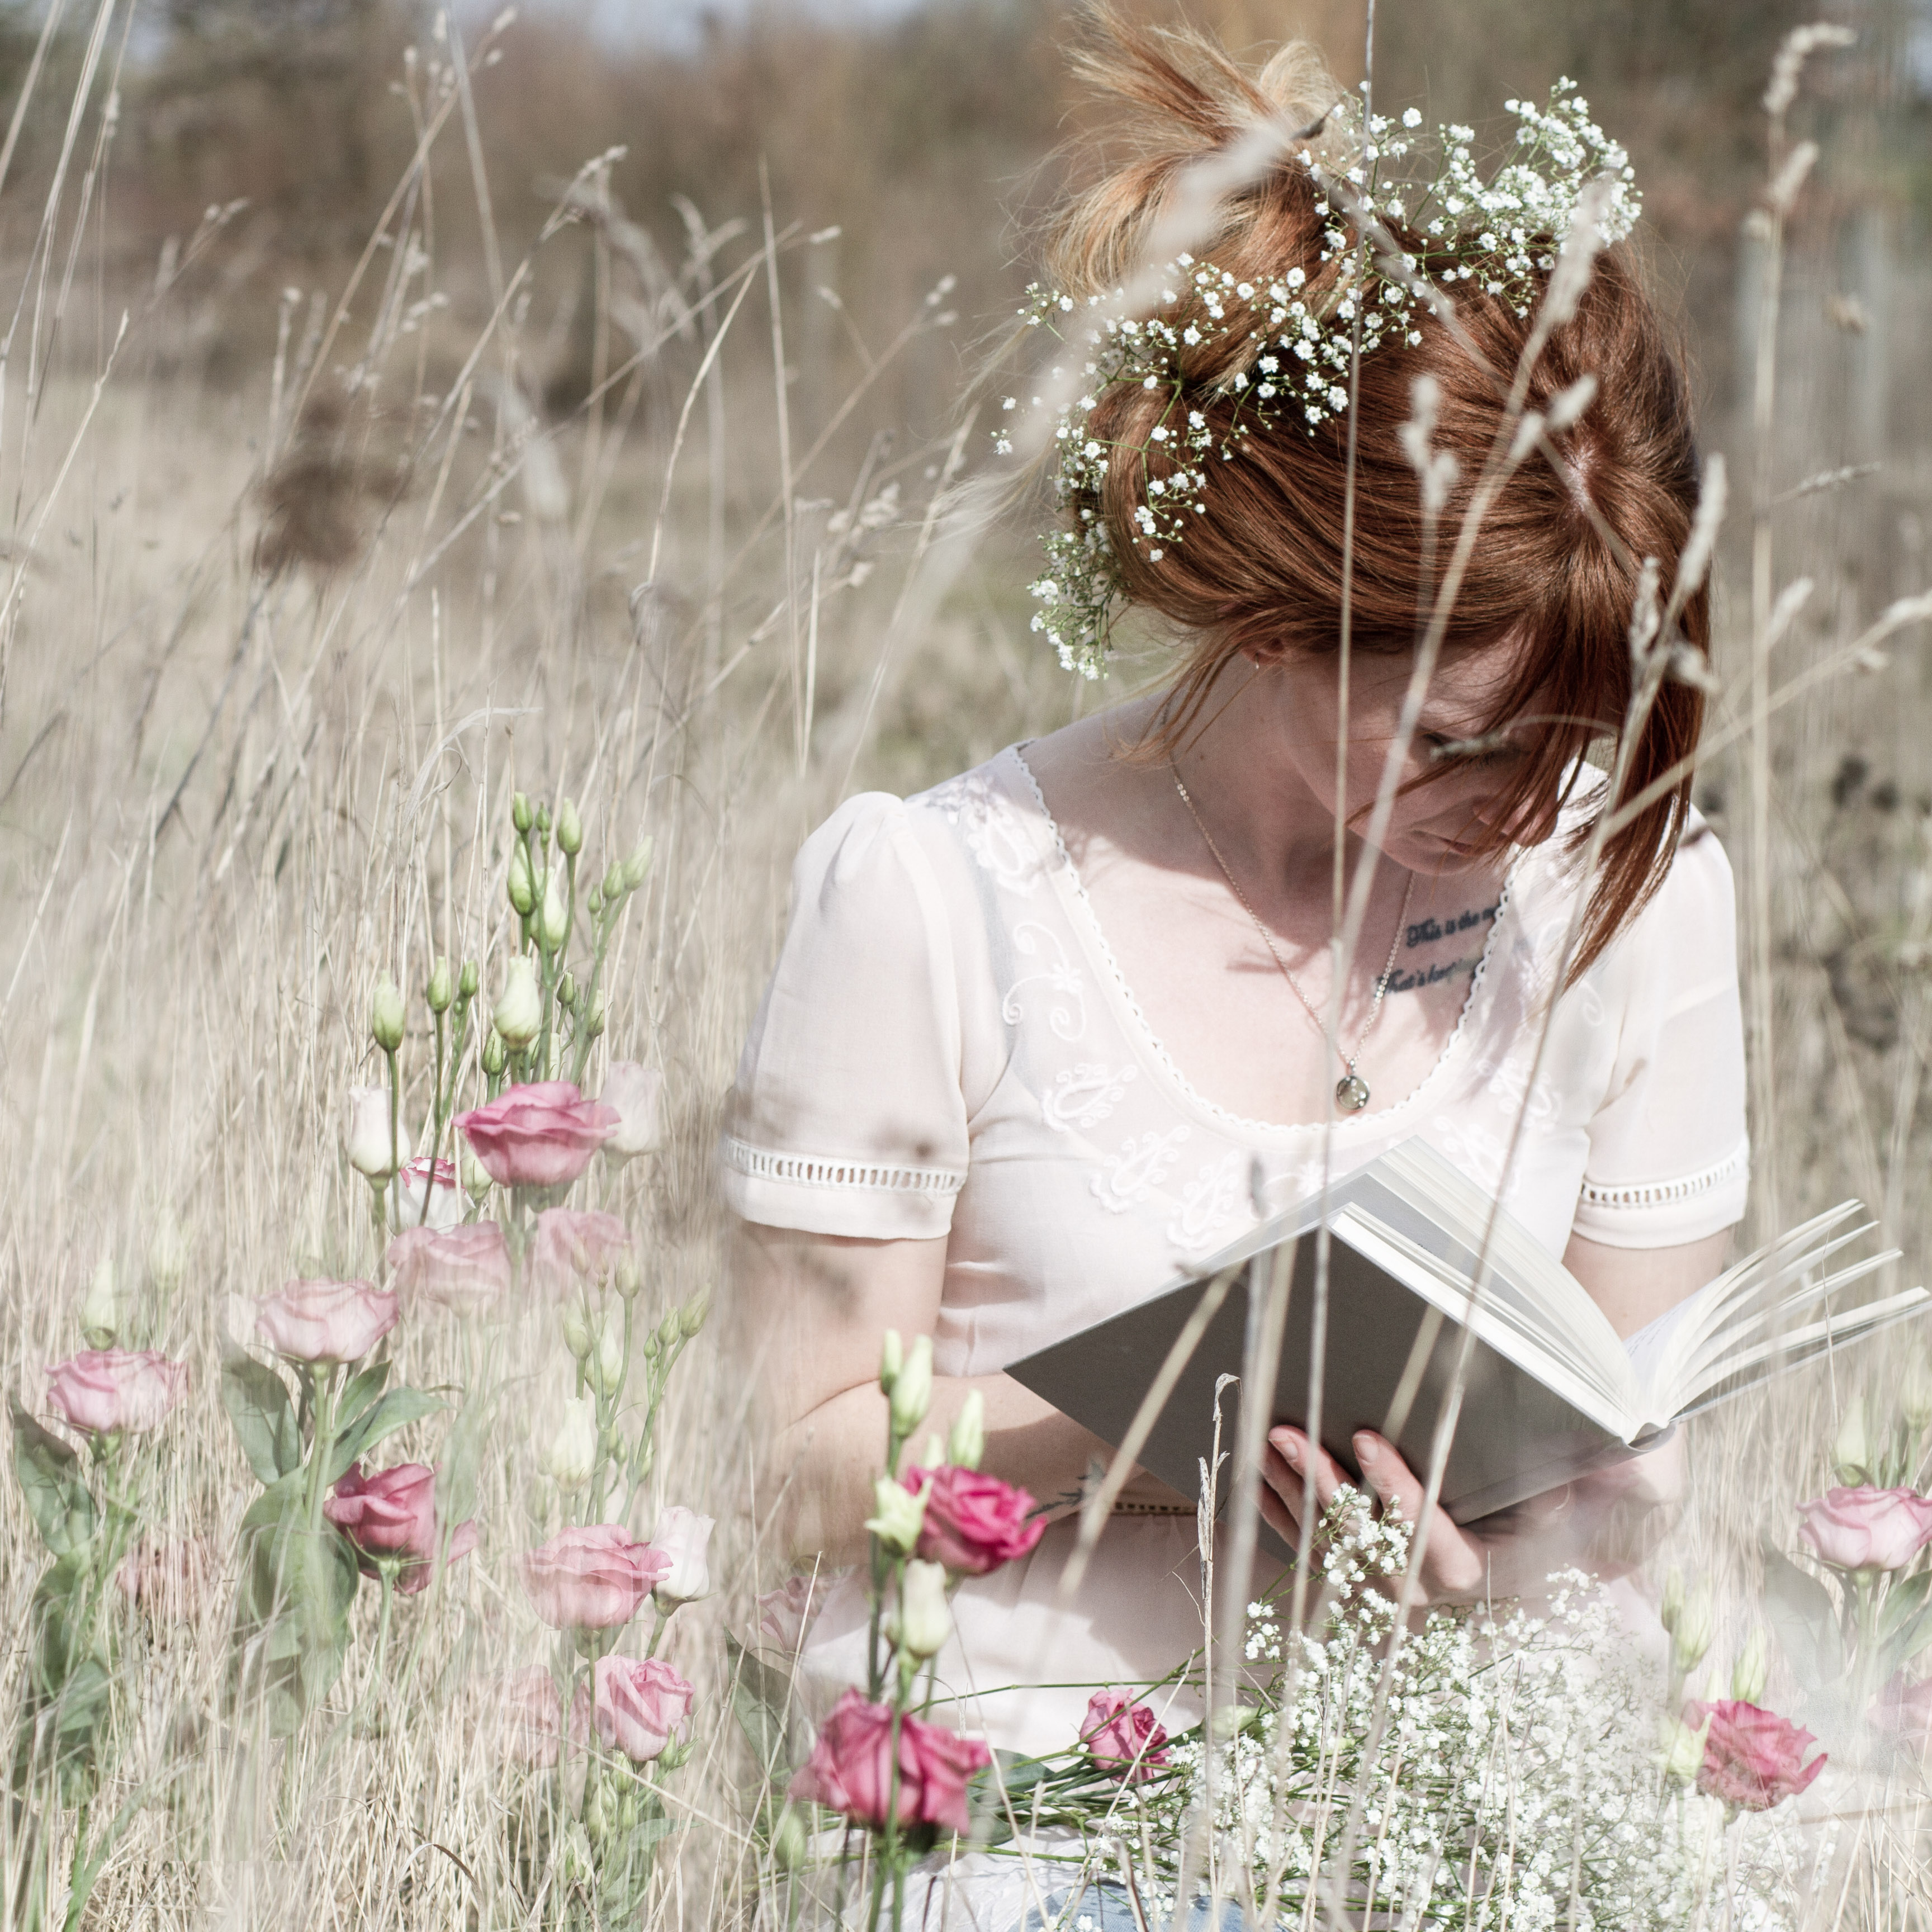 Woman journaling beside pink flowers